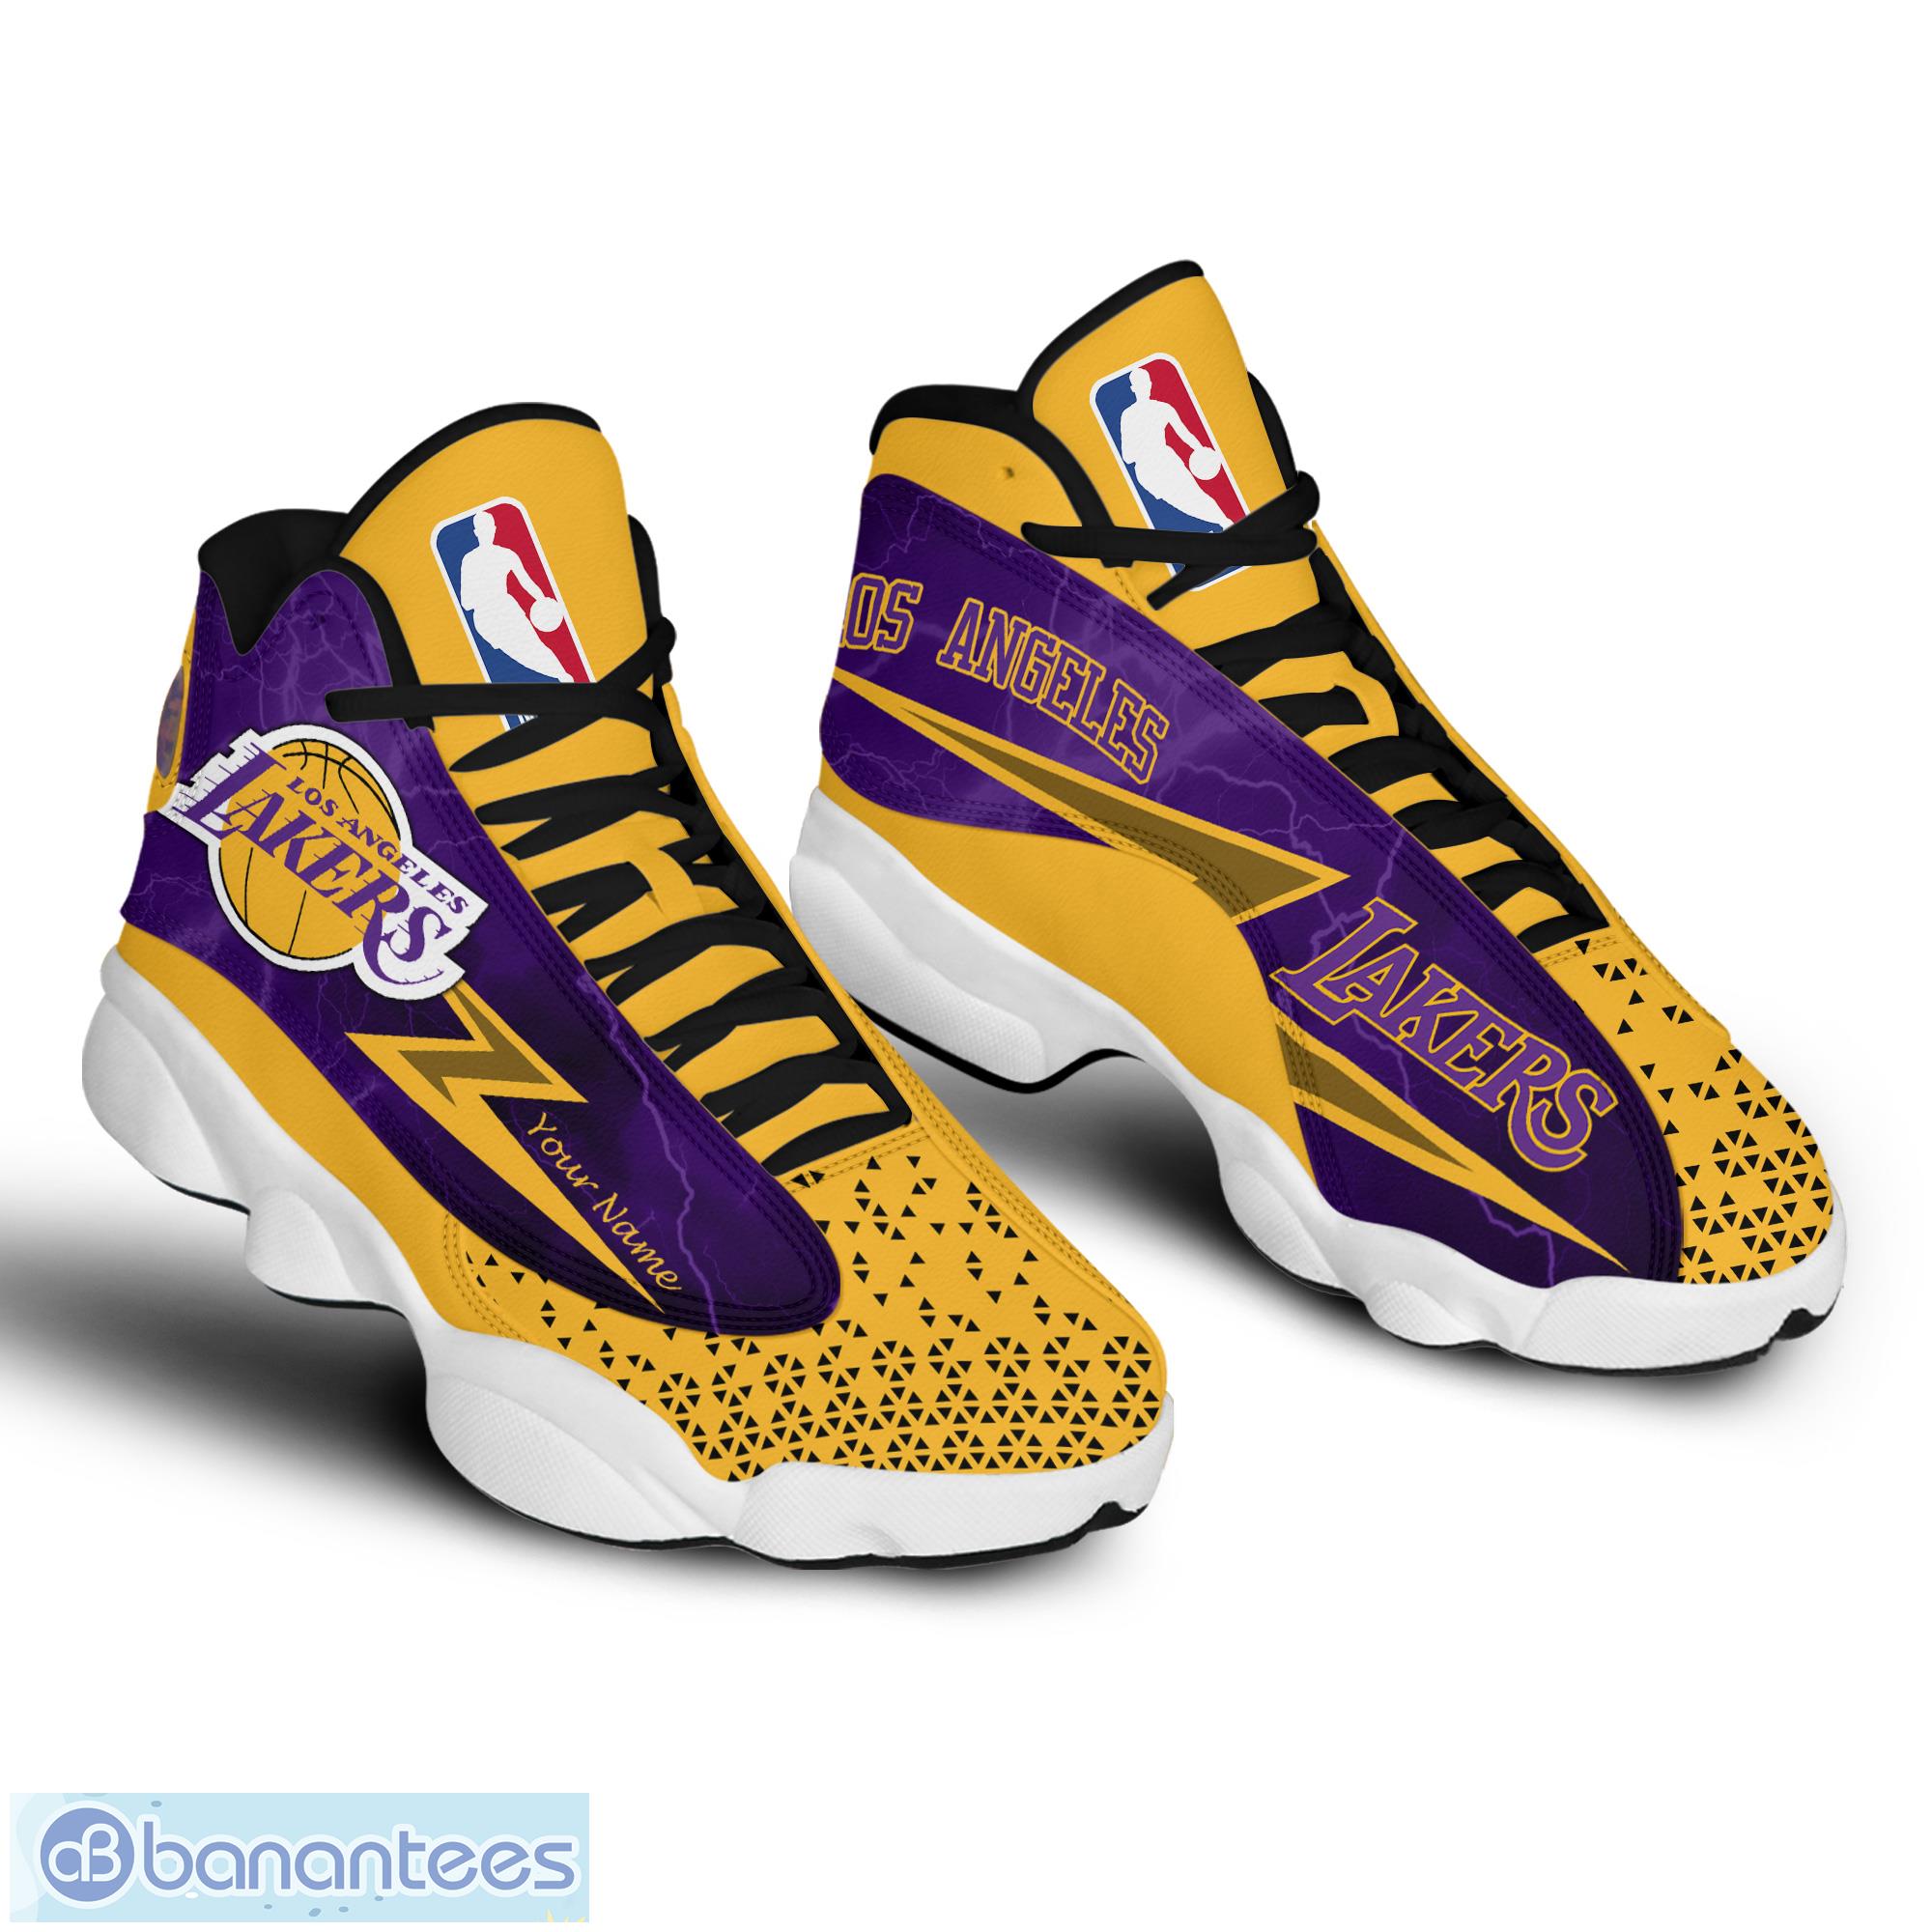 Nba basketball team los angeles lakers purple yellow air jordan 13 shoes